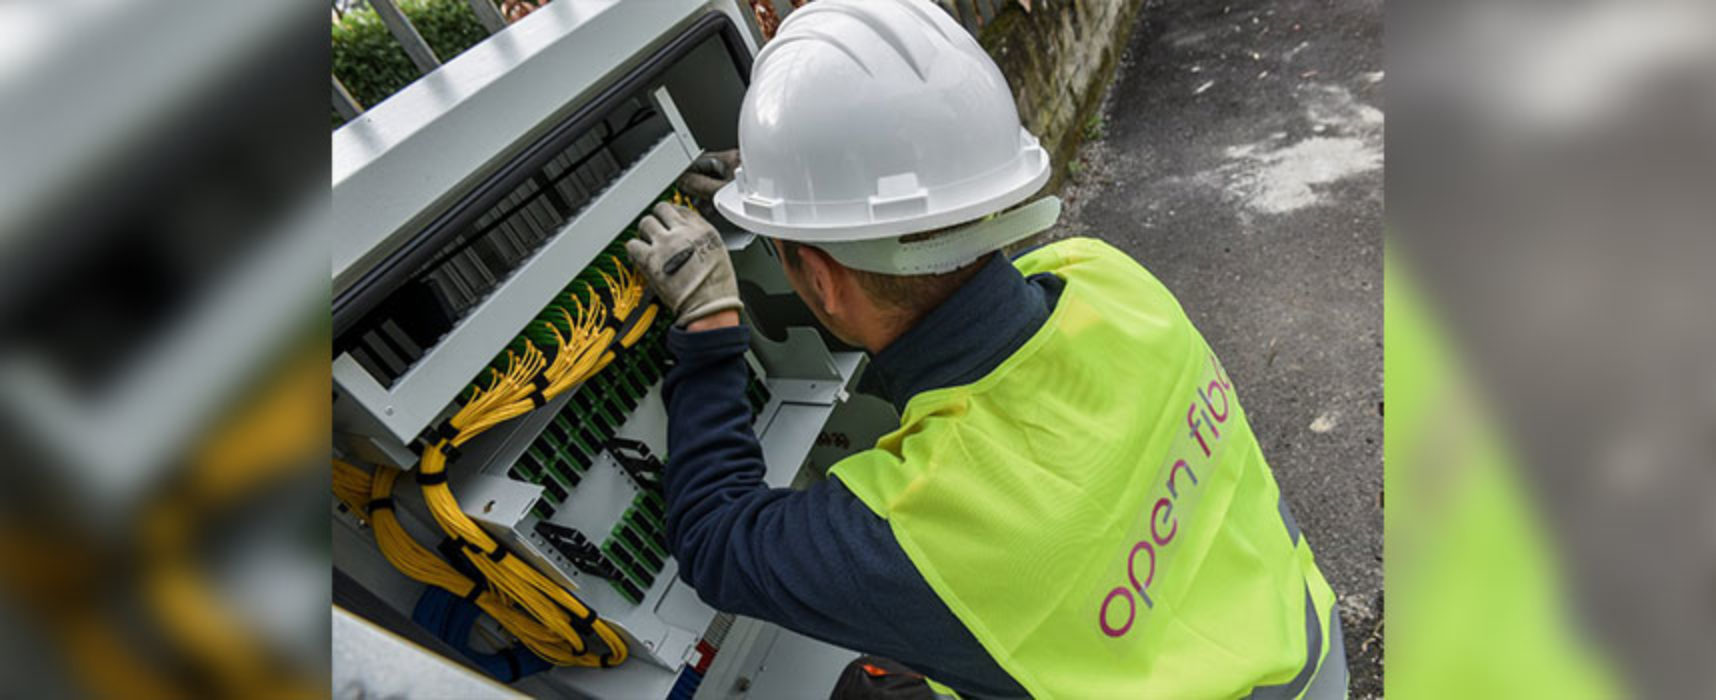 A Bisceglie arriva la banda ultra-larga in fibra ottica su larga scala